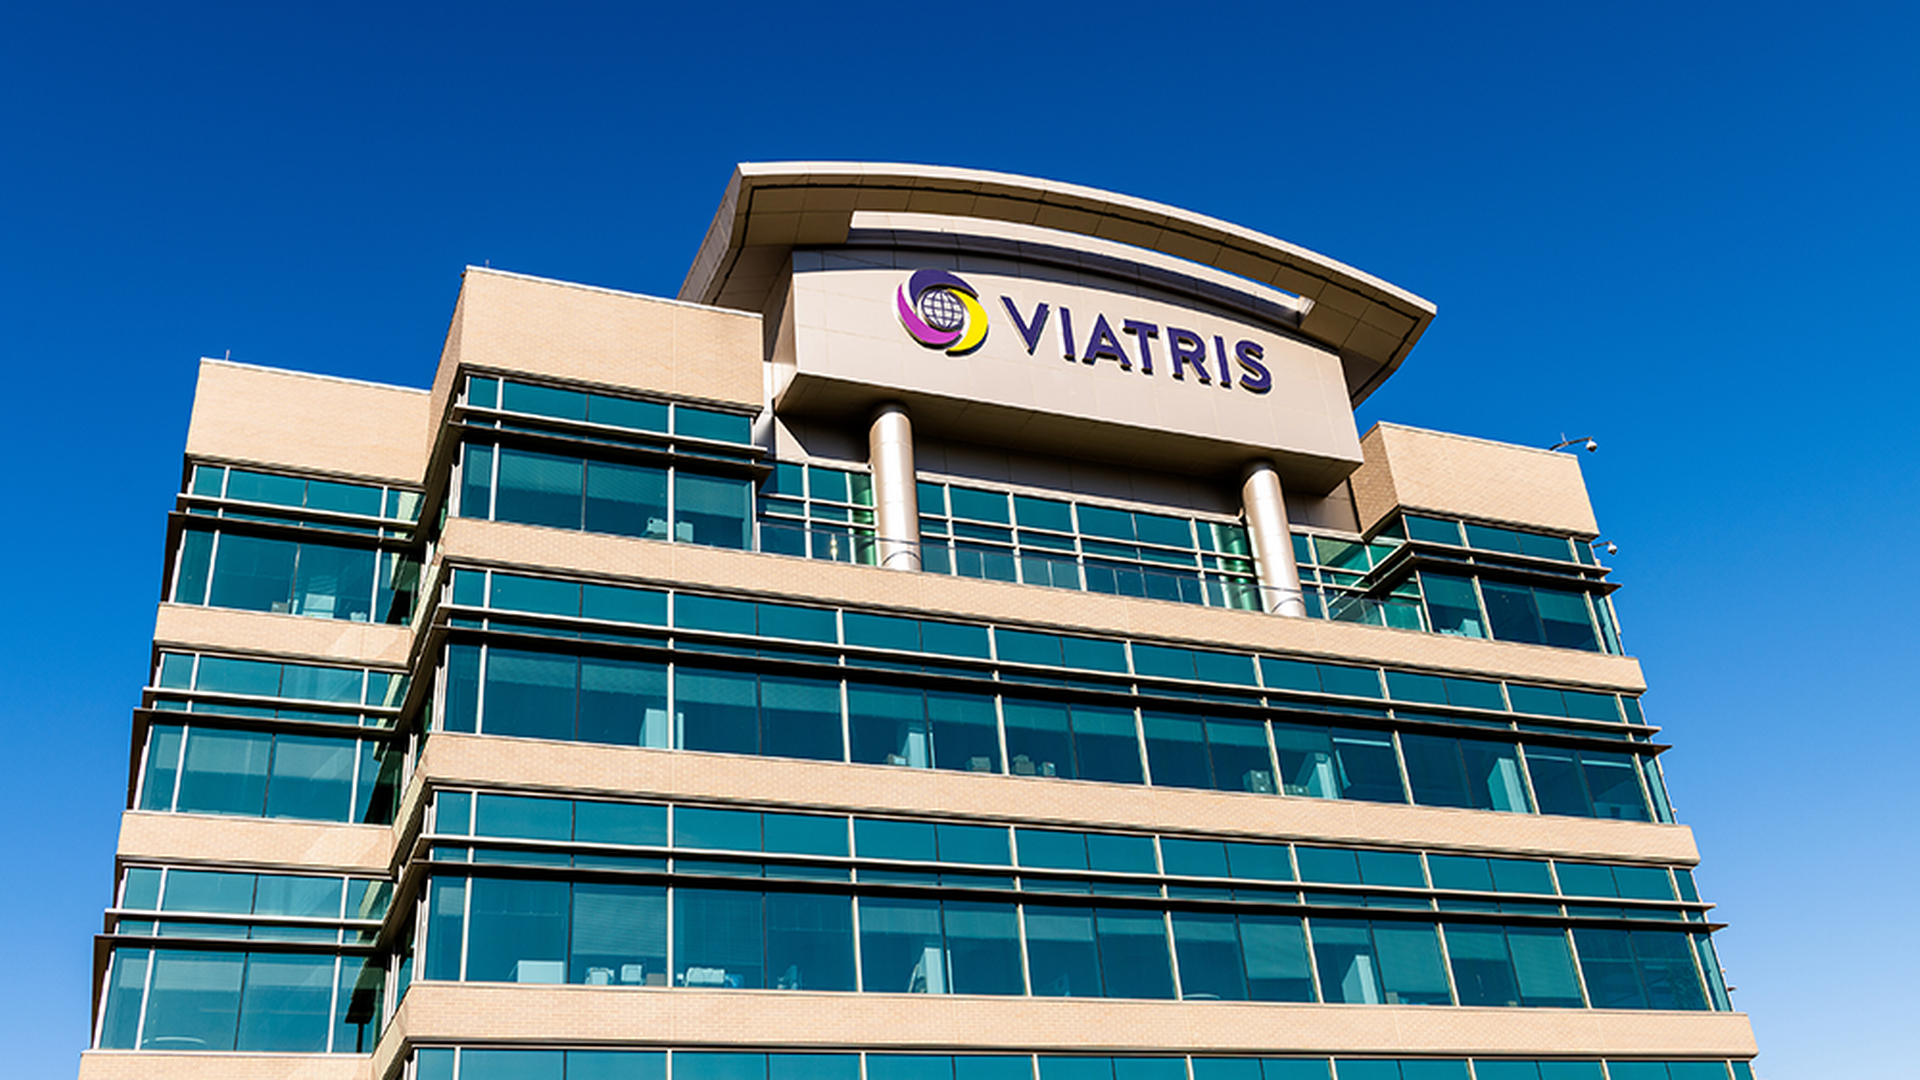 Viatris globale hovedkvarter i Pittsburgh, Pennsylvania i USA. | Foto: Viatris/PR.